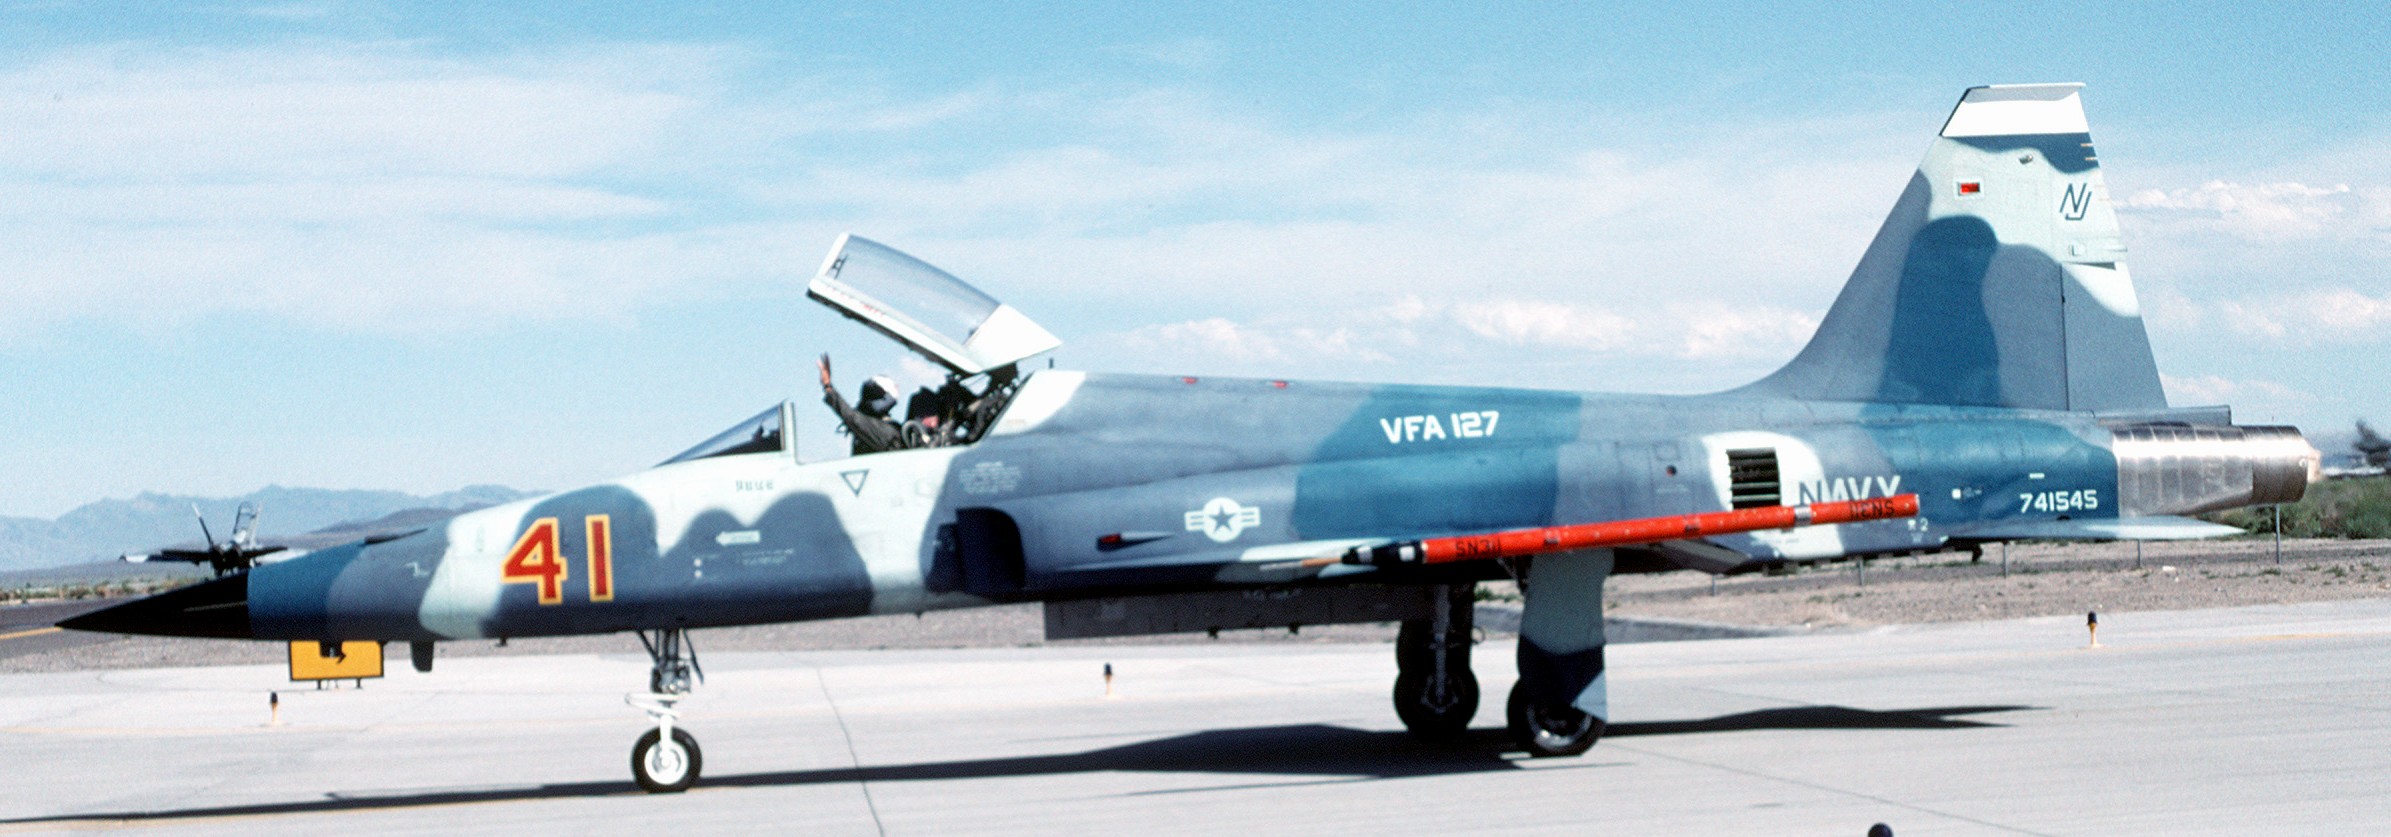 vfa-127 desert bogeys strike fighter squadron f-5e tiger 1993 14